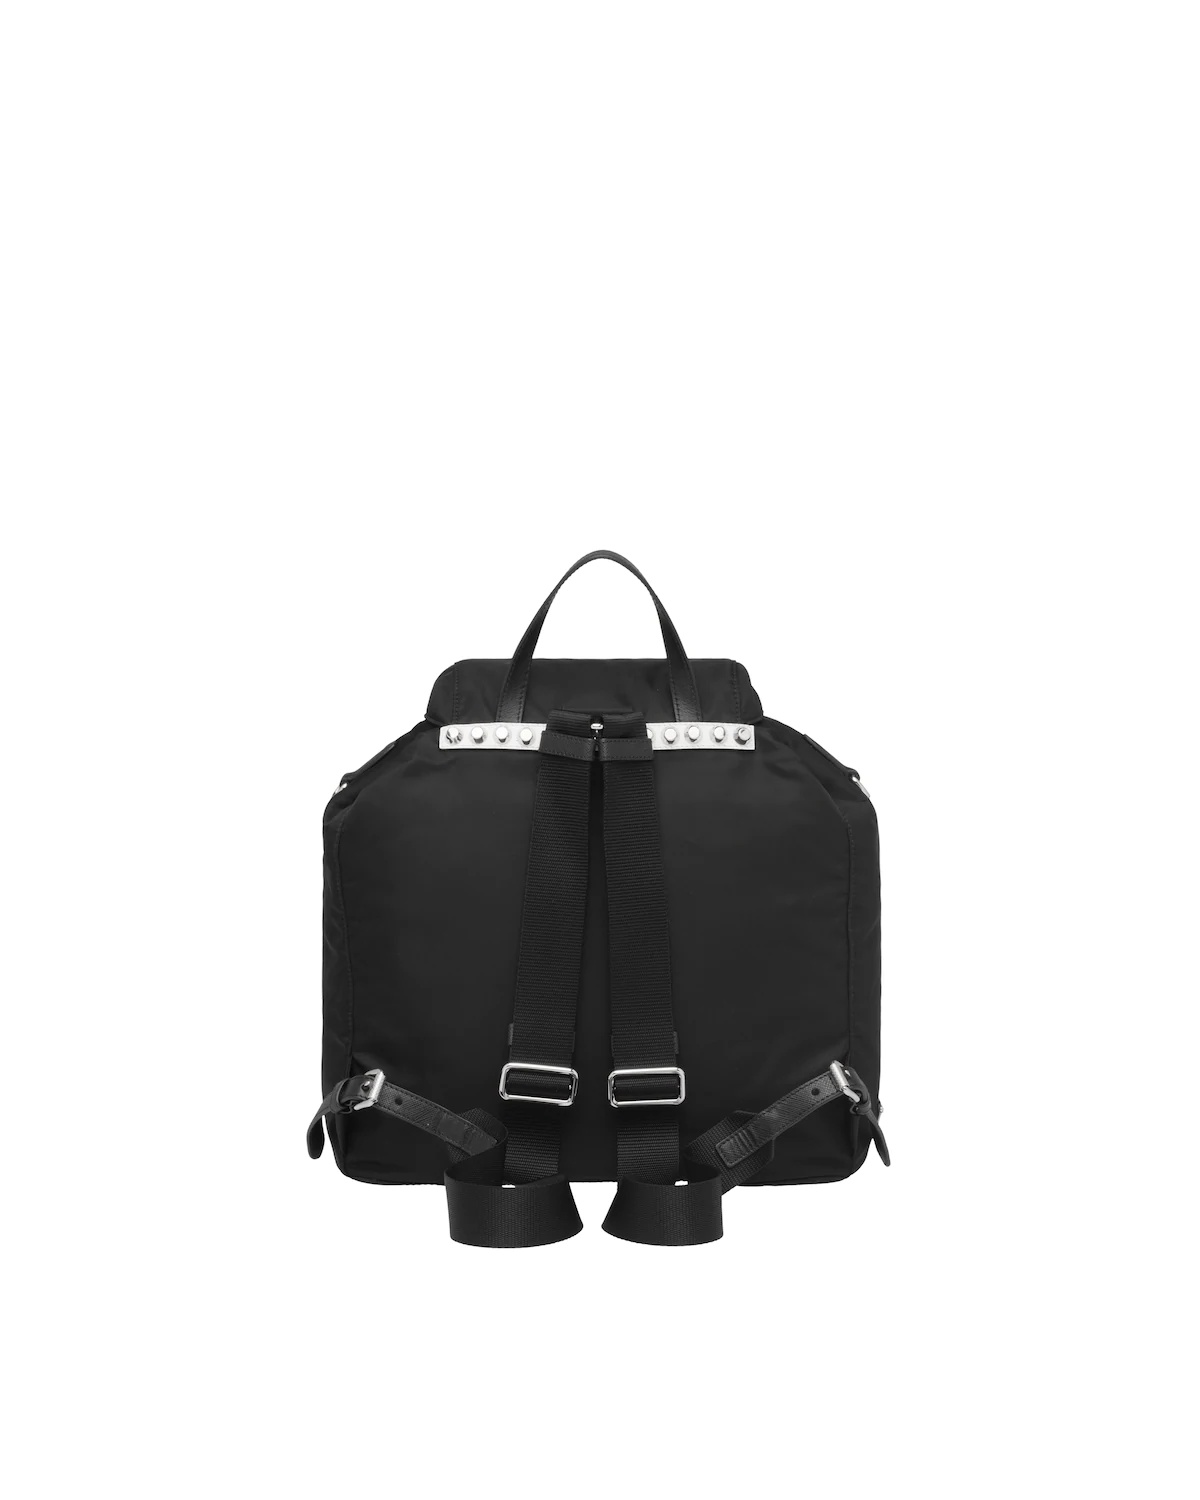 Prada Black Nylon Backpack - 4